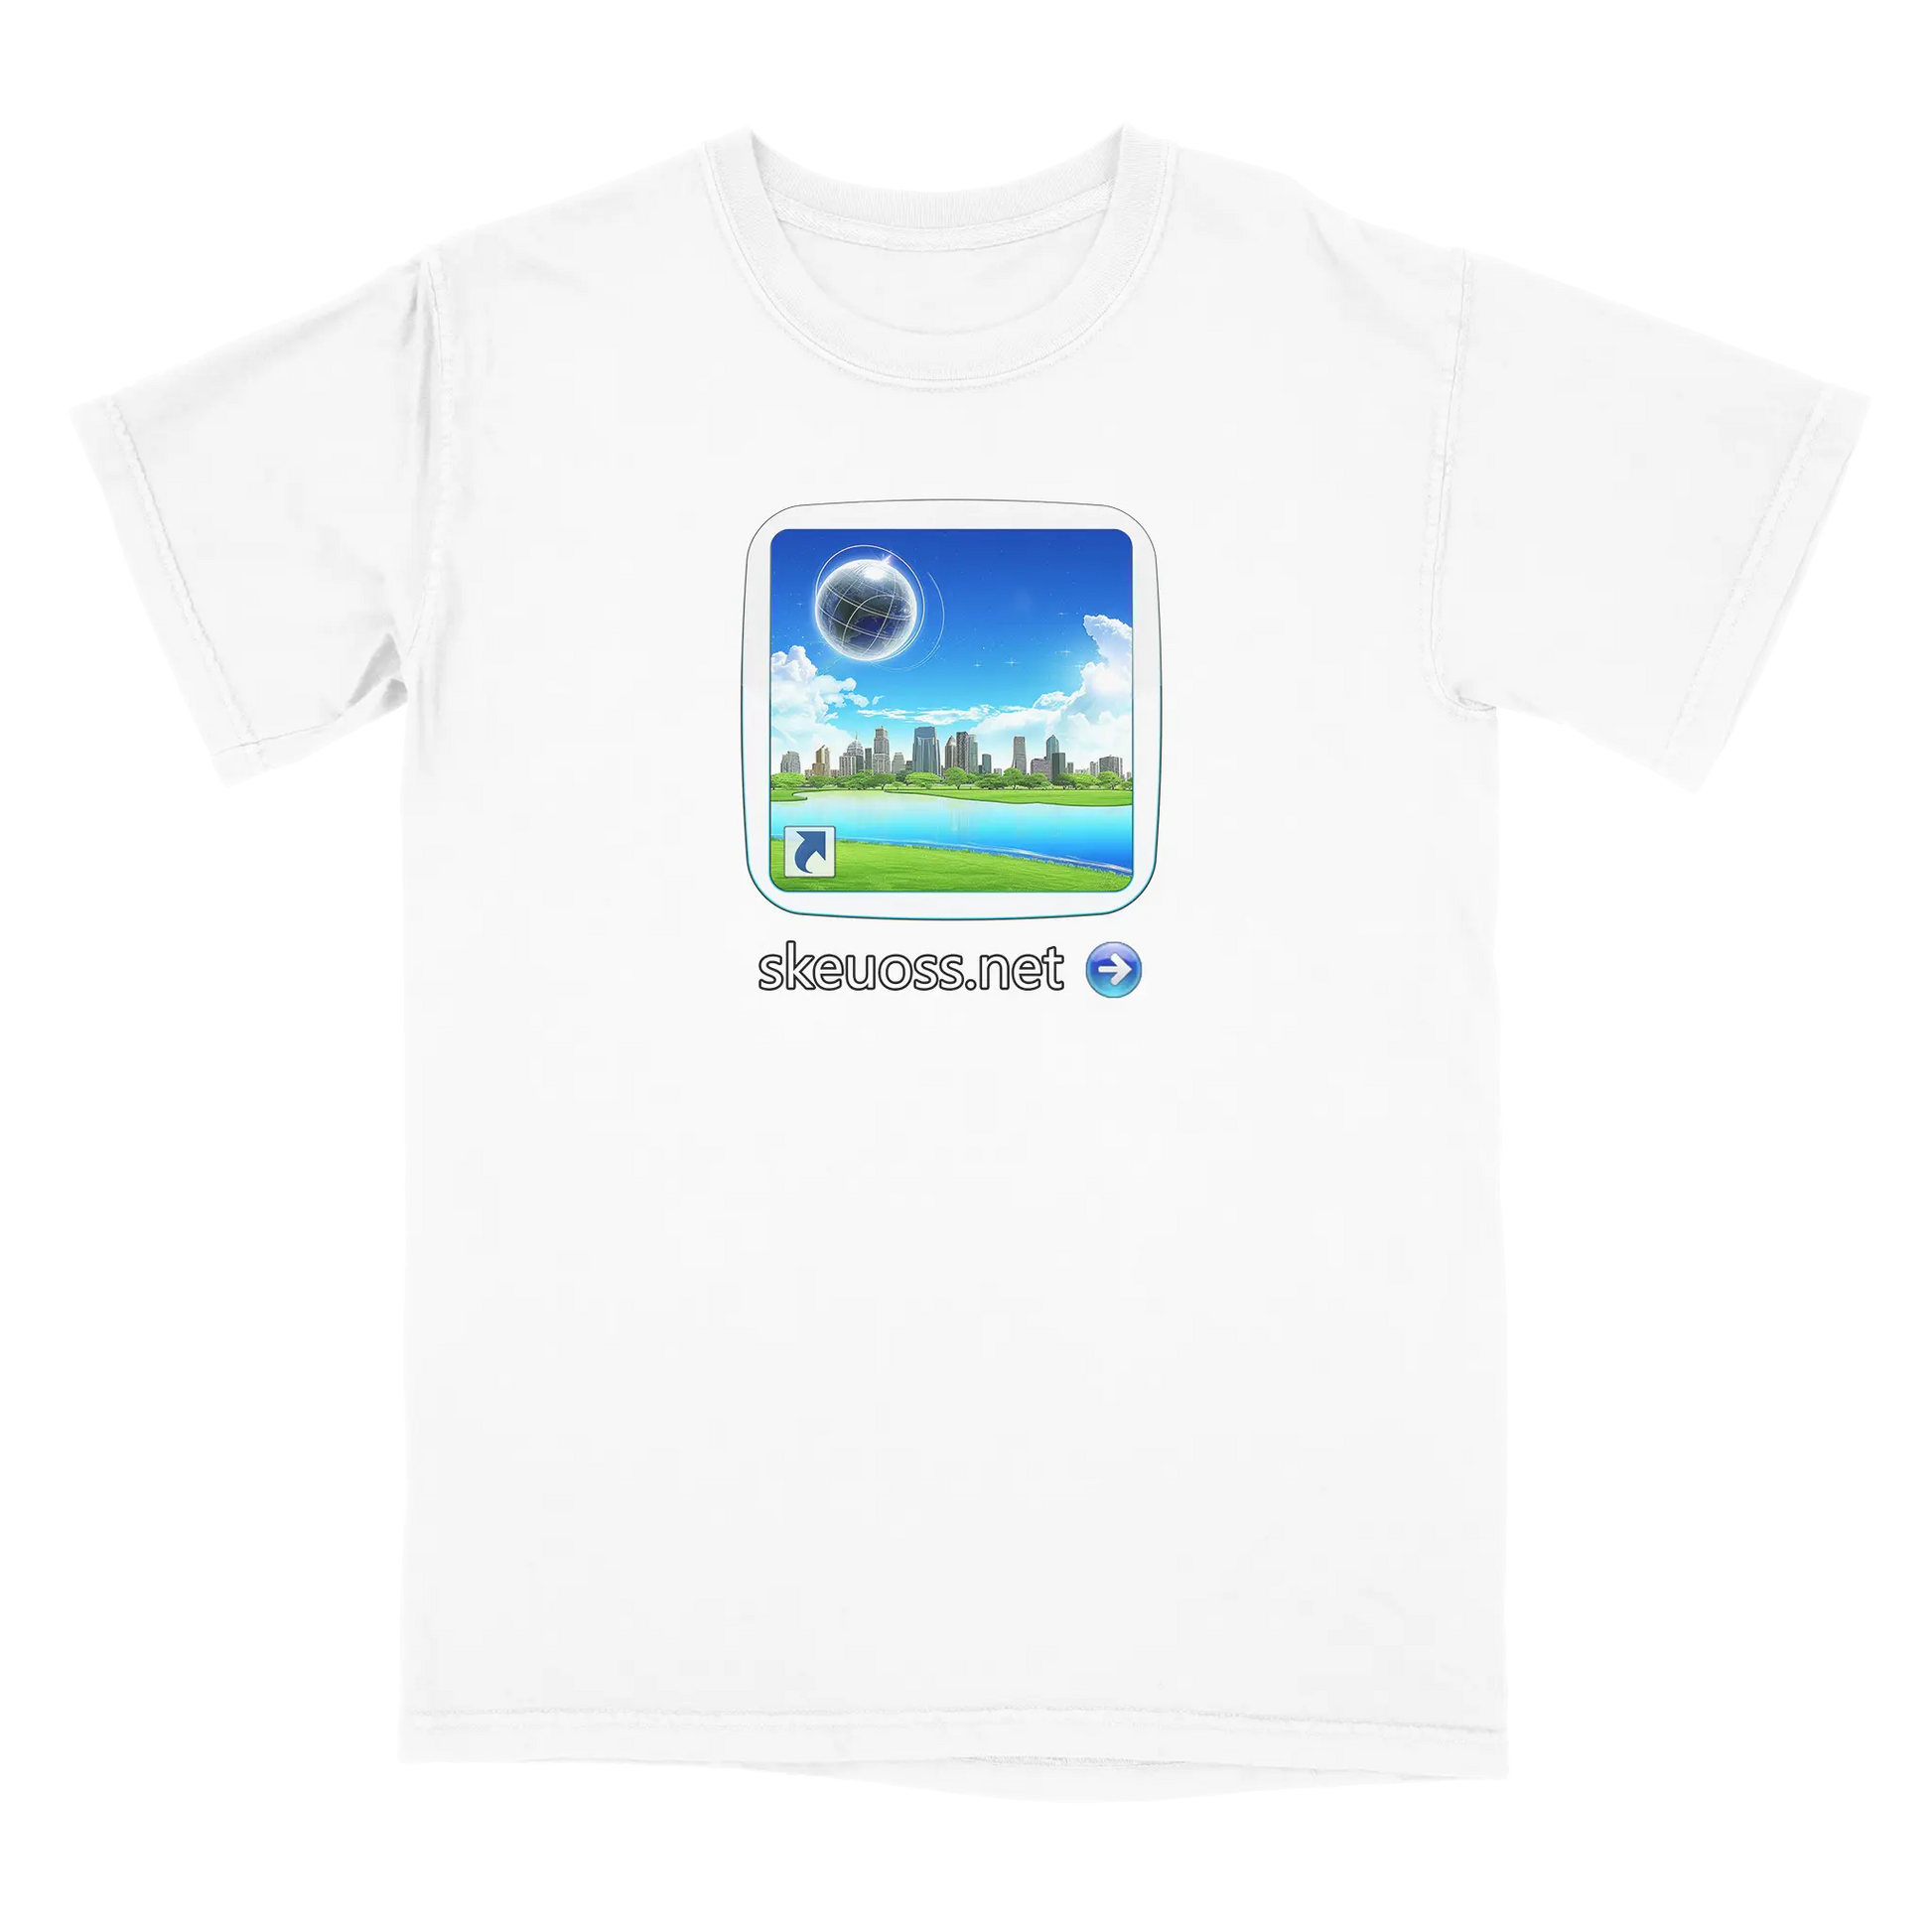 Frutiger Aero T-shirt - User Login Collection - User 381